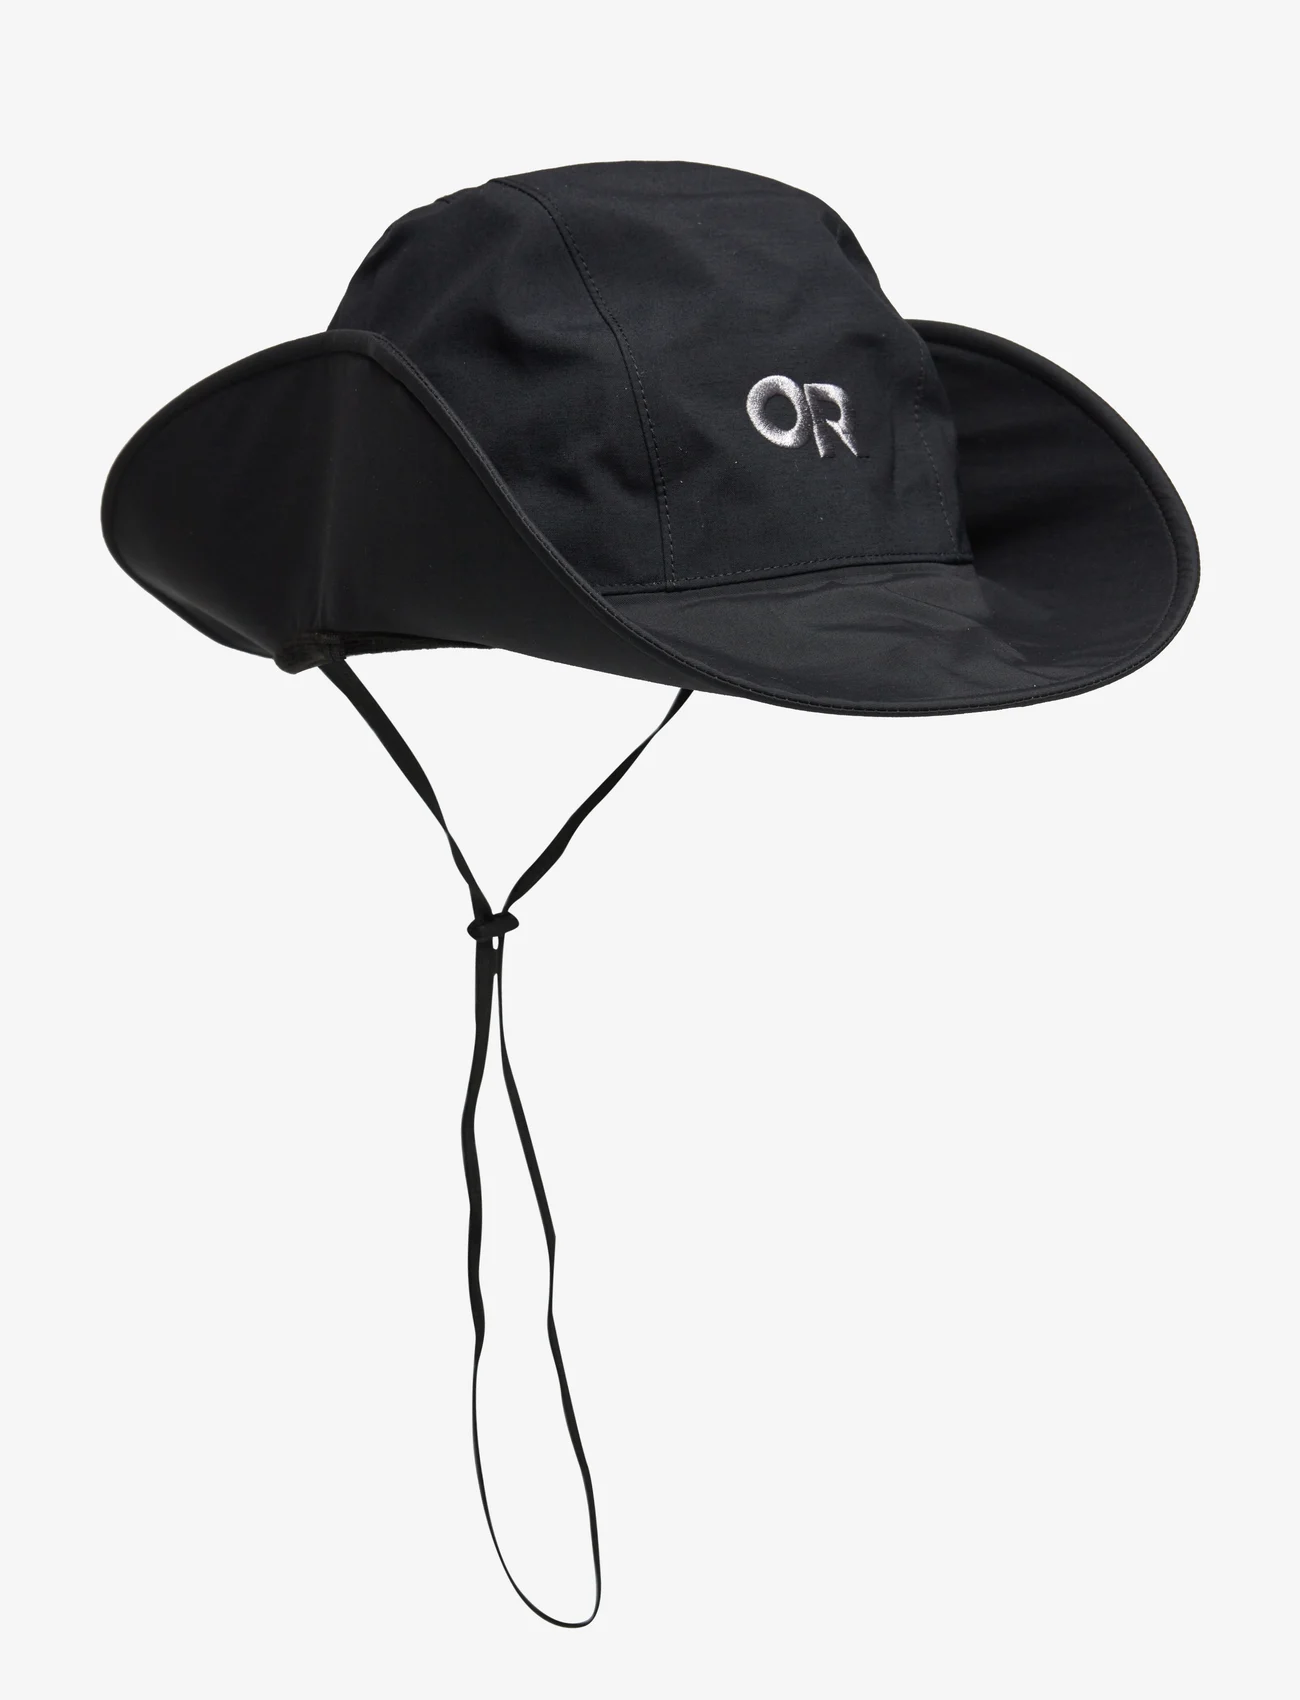 Outdoor Research - SEATTLE RAIN HAT - hats - black - 0